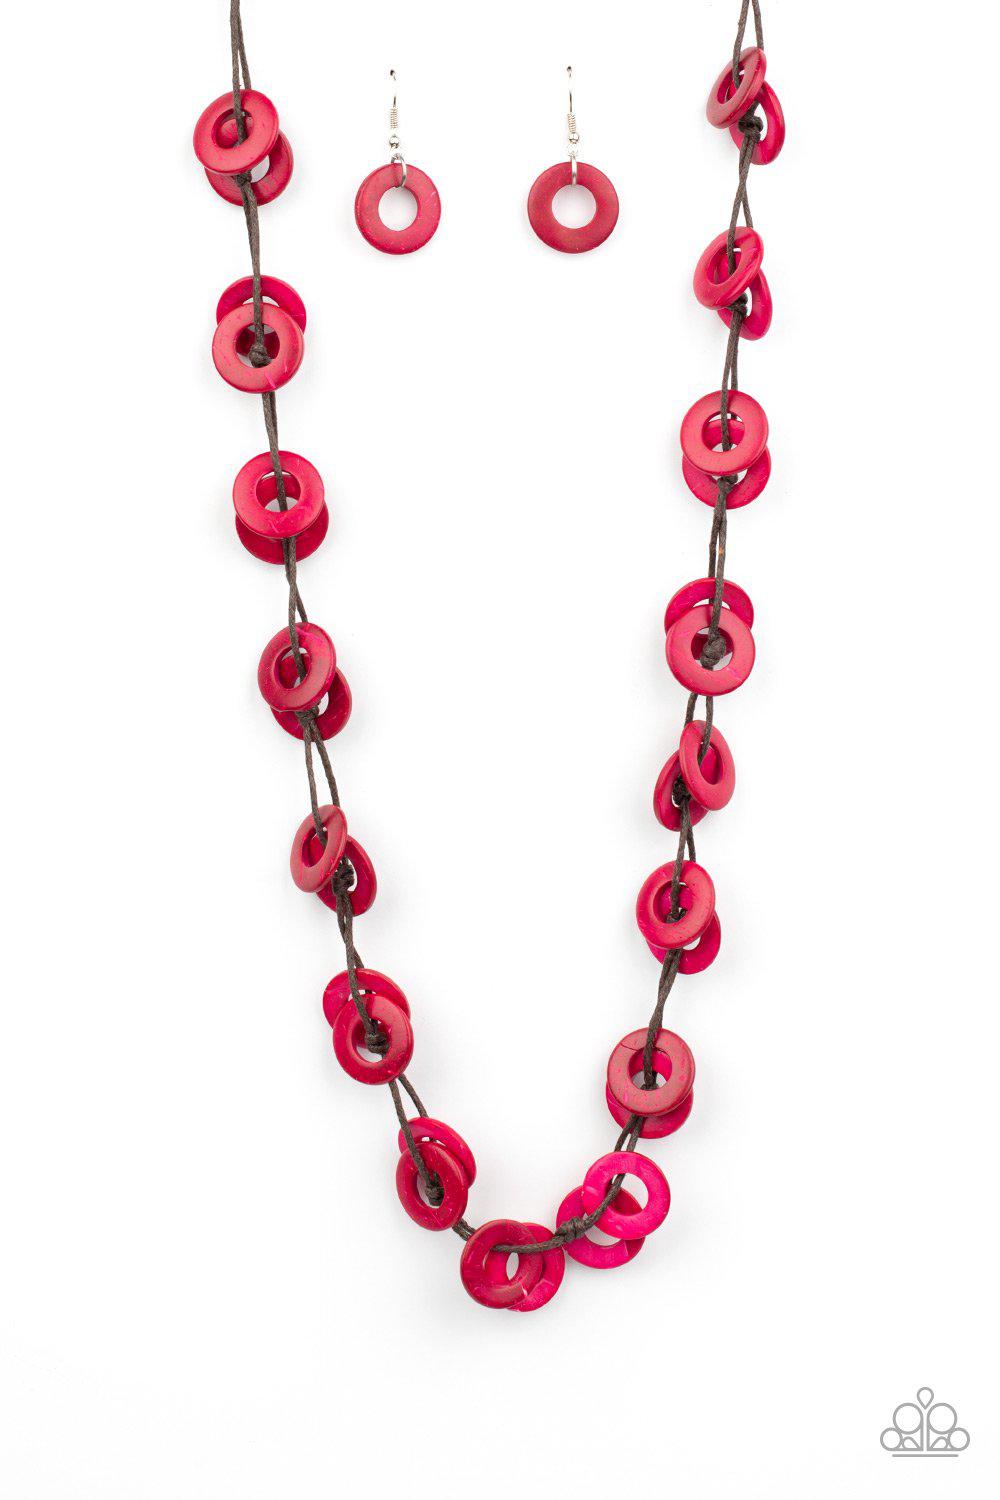 Waikiki Winds Pink Wood Necklace - Paparazzi Accessories - lightbox -CarasShop.com - $5 Jewelry by Cara Jewels